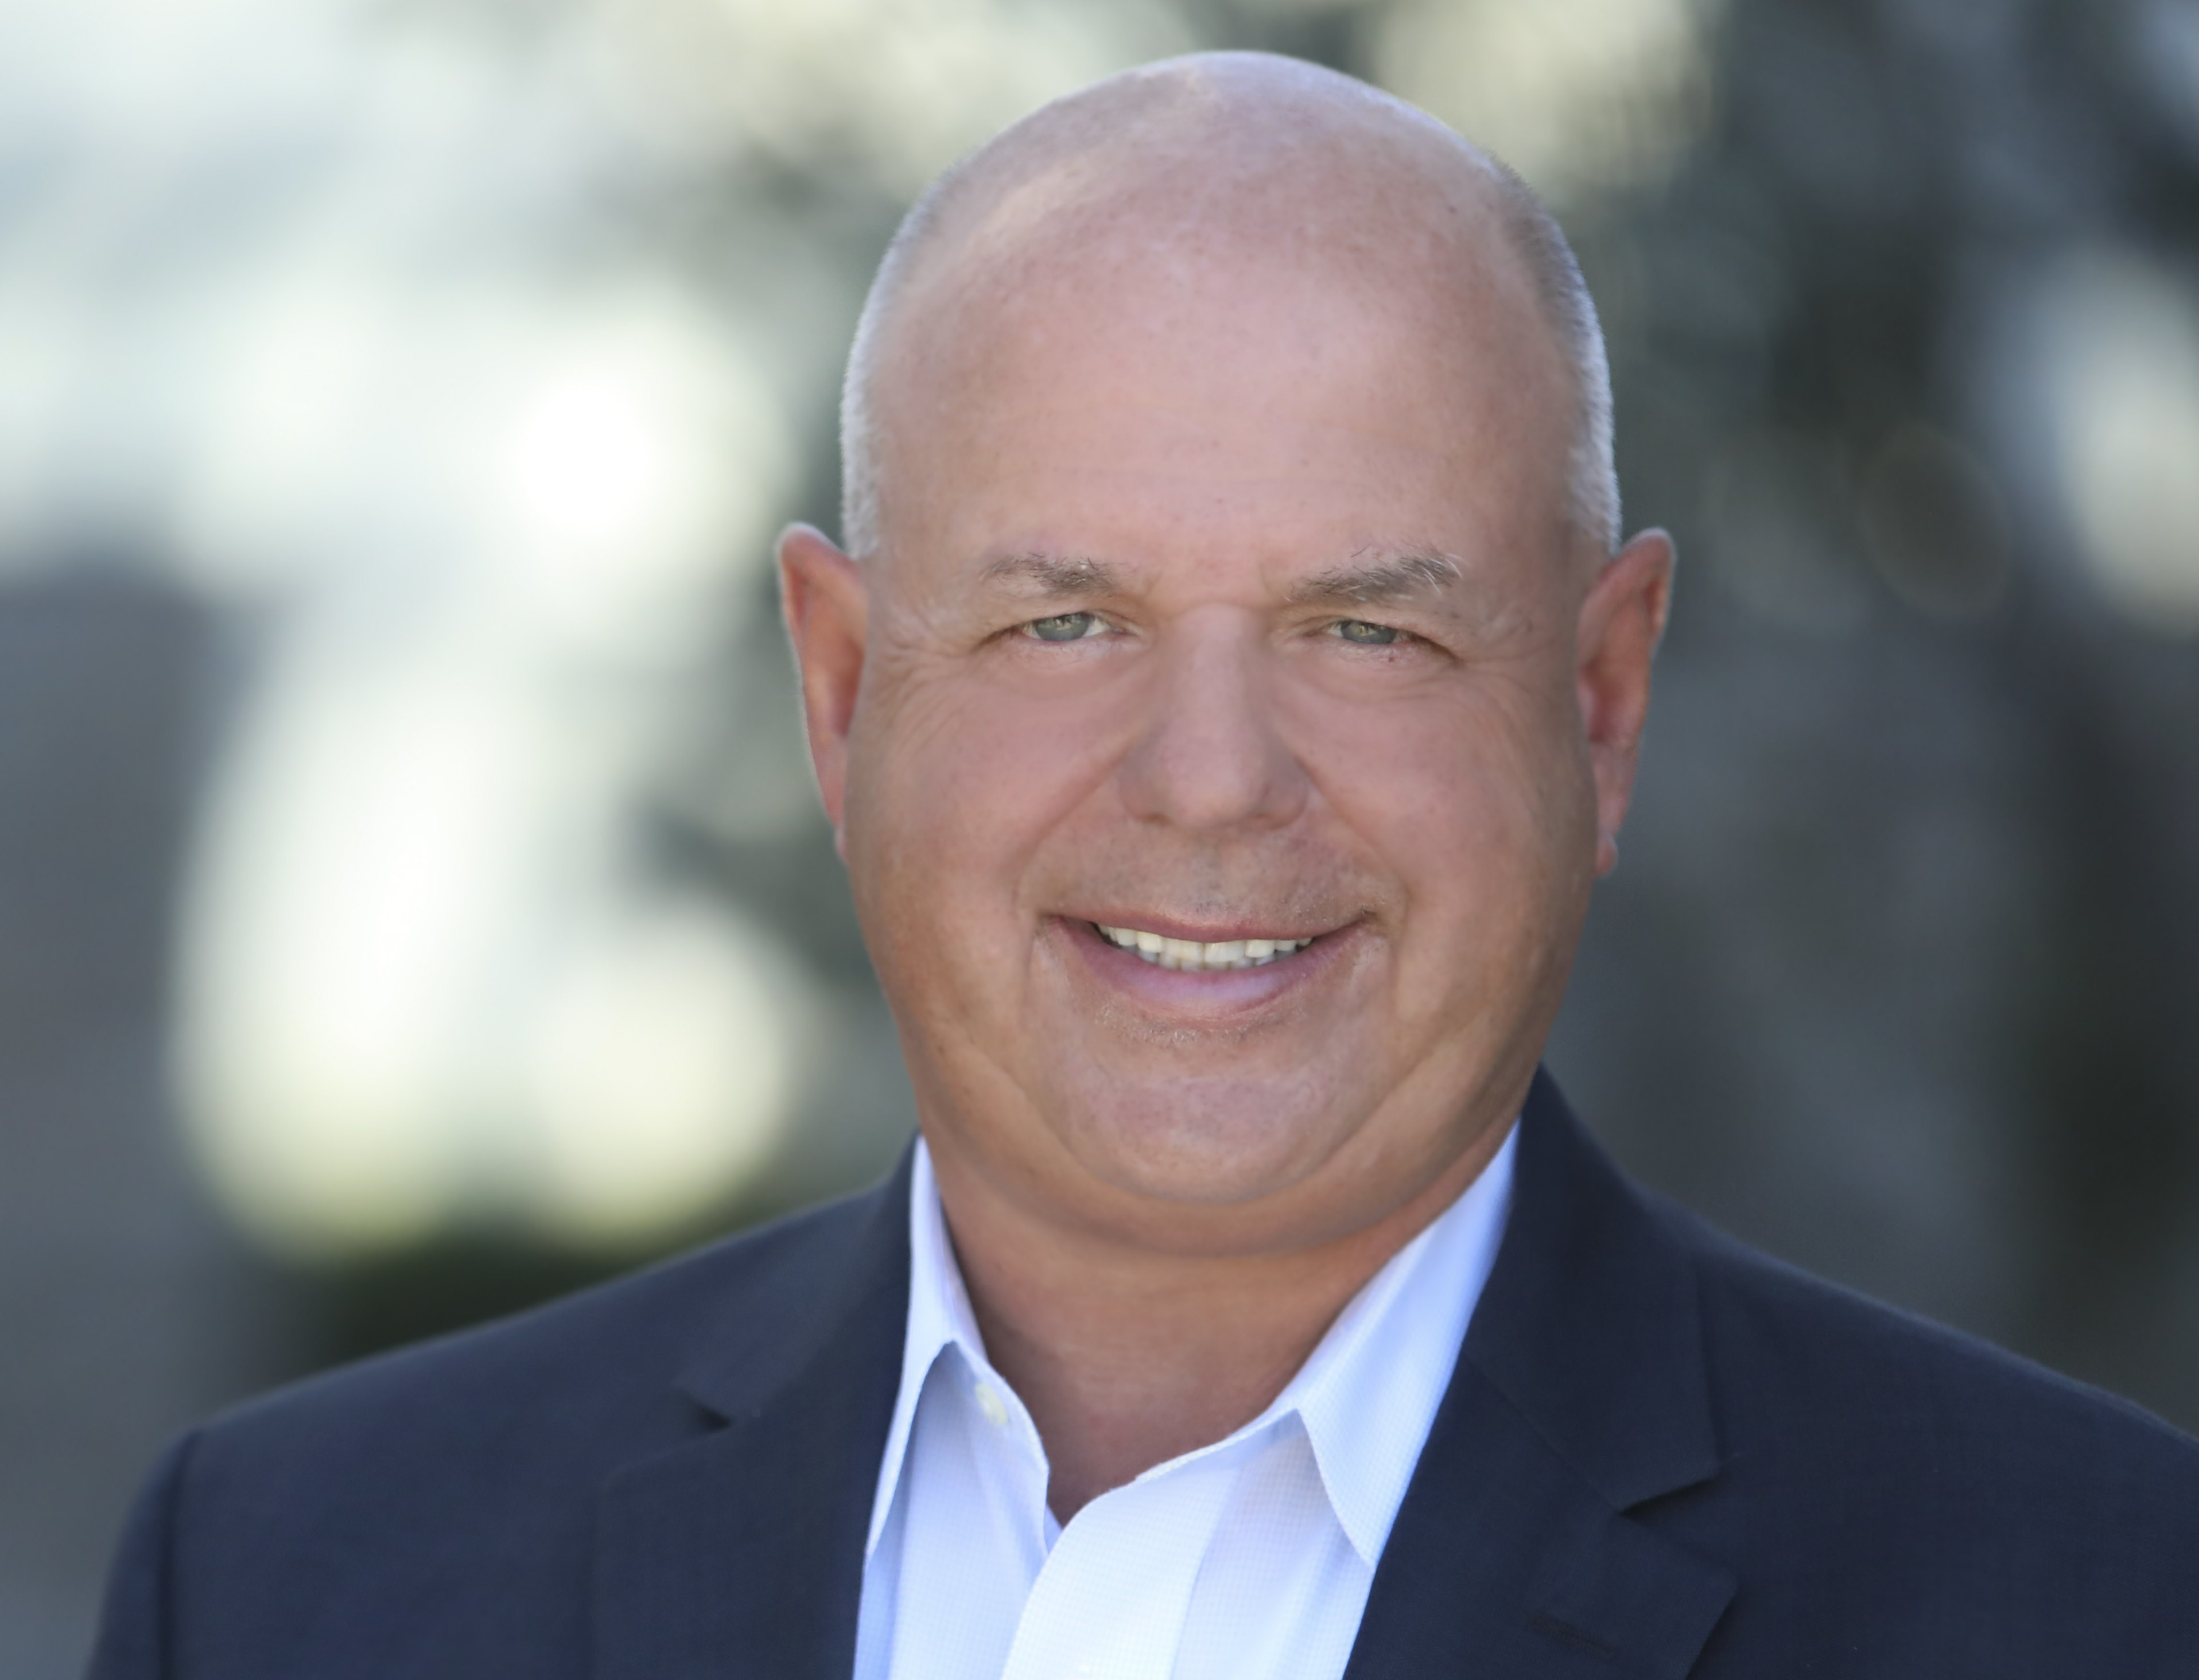 Robert Moore Steps Down as CEO of Cetera, Cites Health Reasons